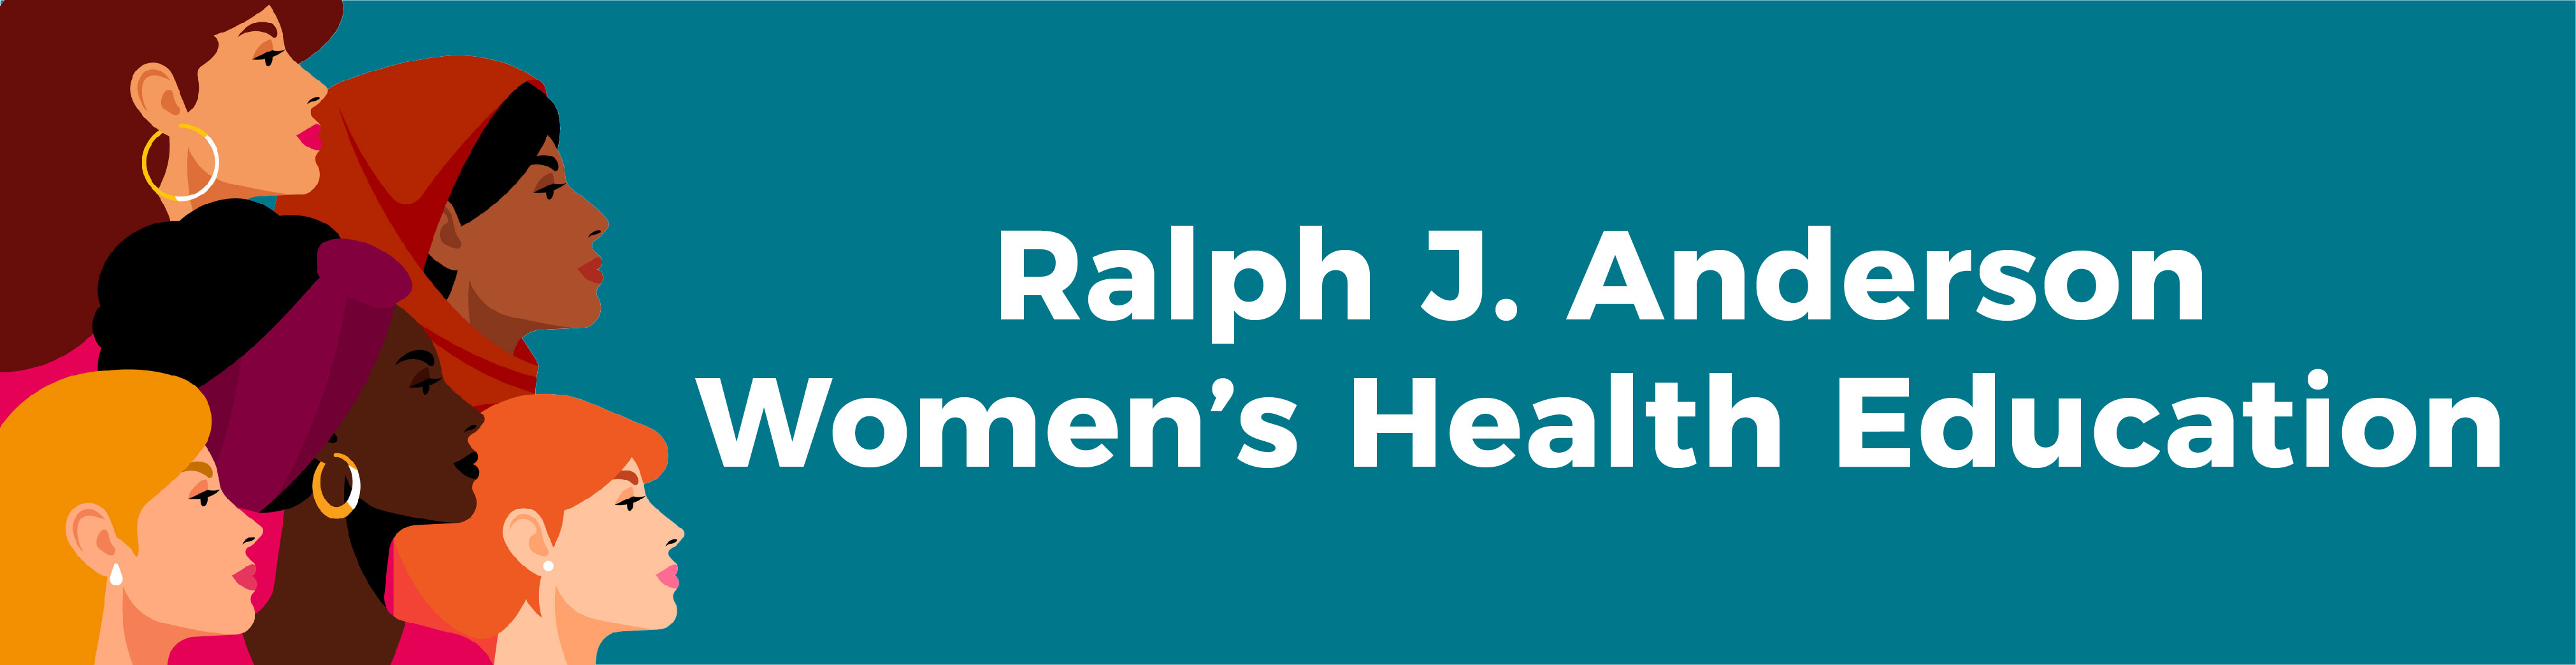 Ralph J. Anderson Women's Health Education banner 